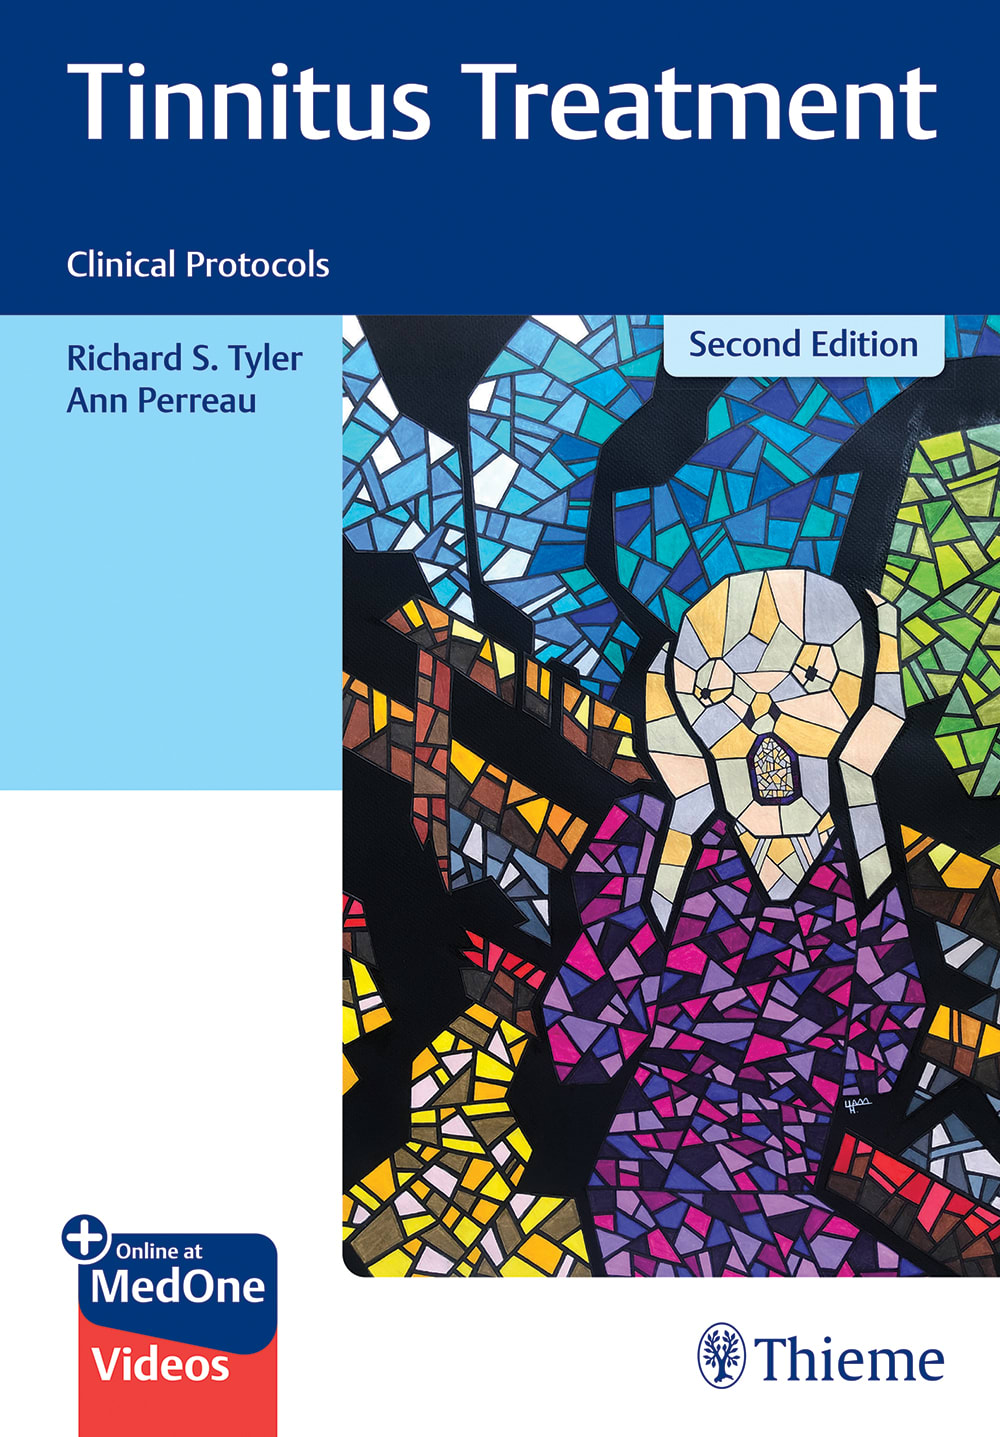 tinnitus treatment clinical protocols 2nd edition richard tyler, ann perreau 1684201713, 9781684201716